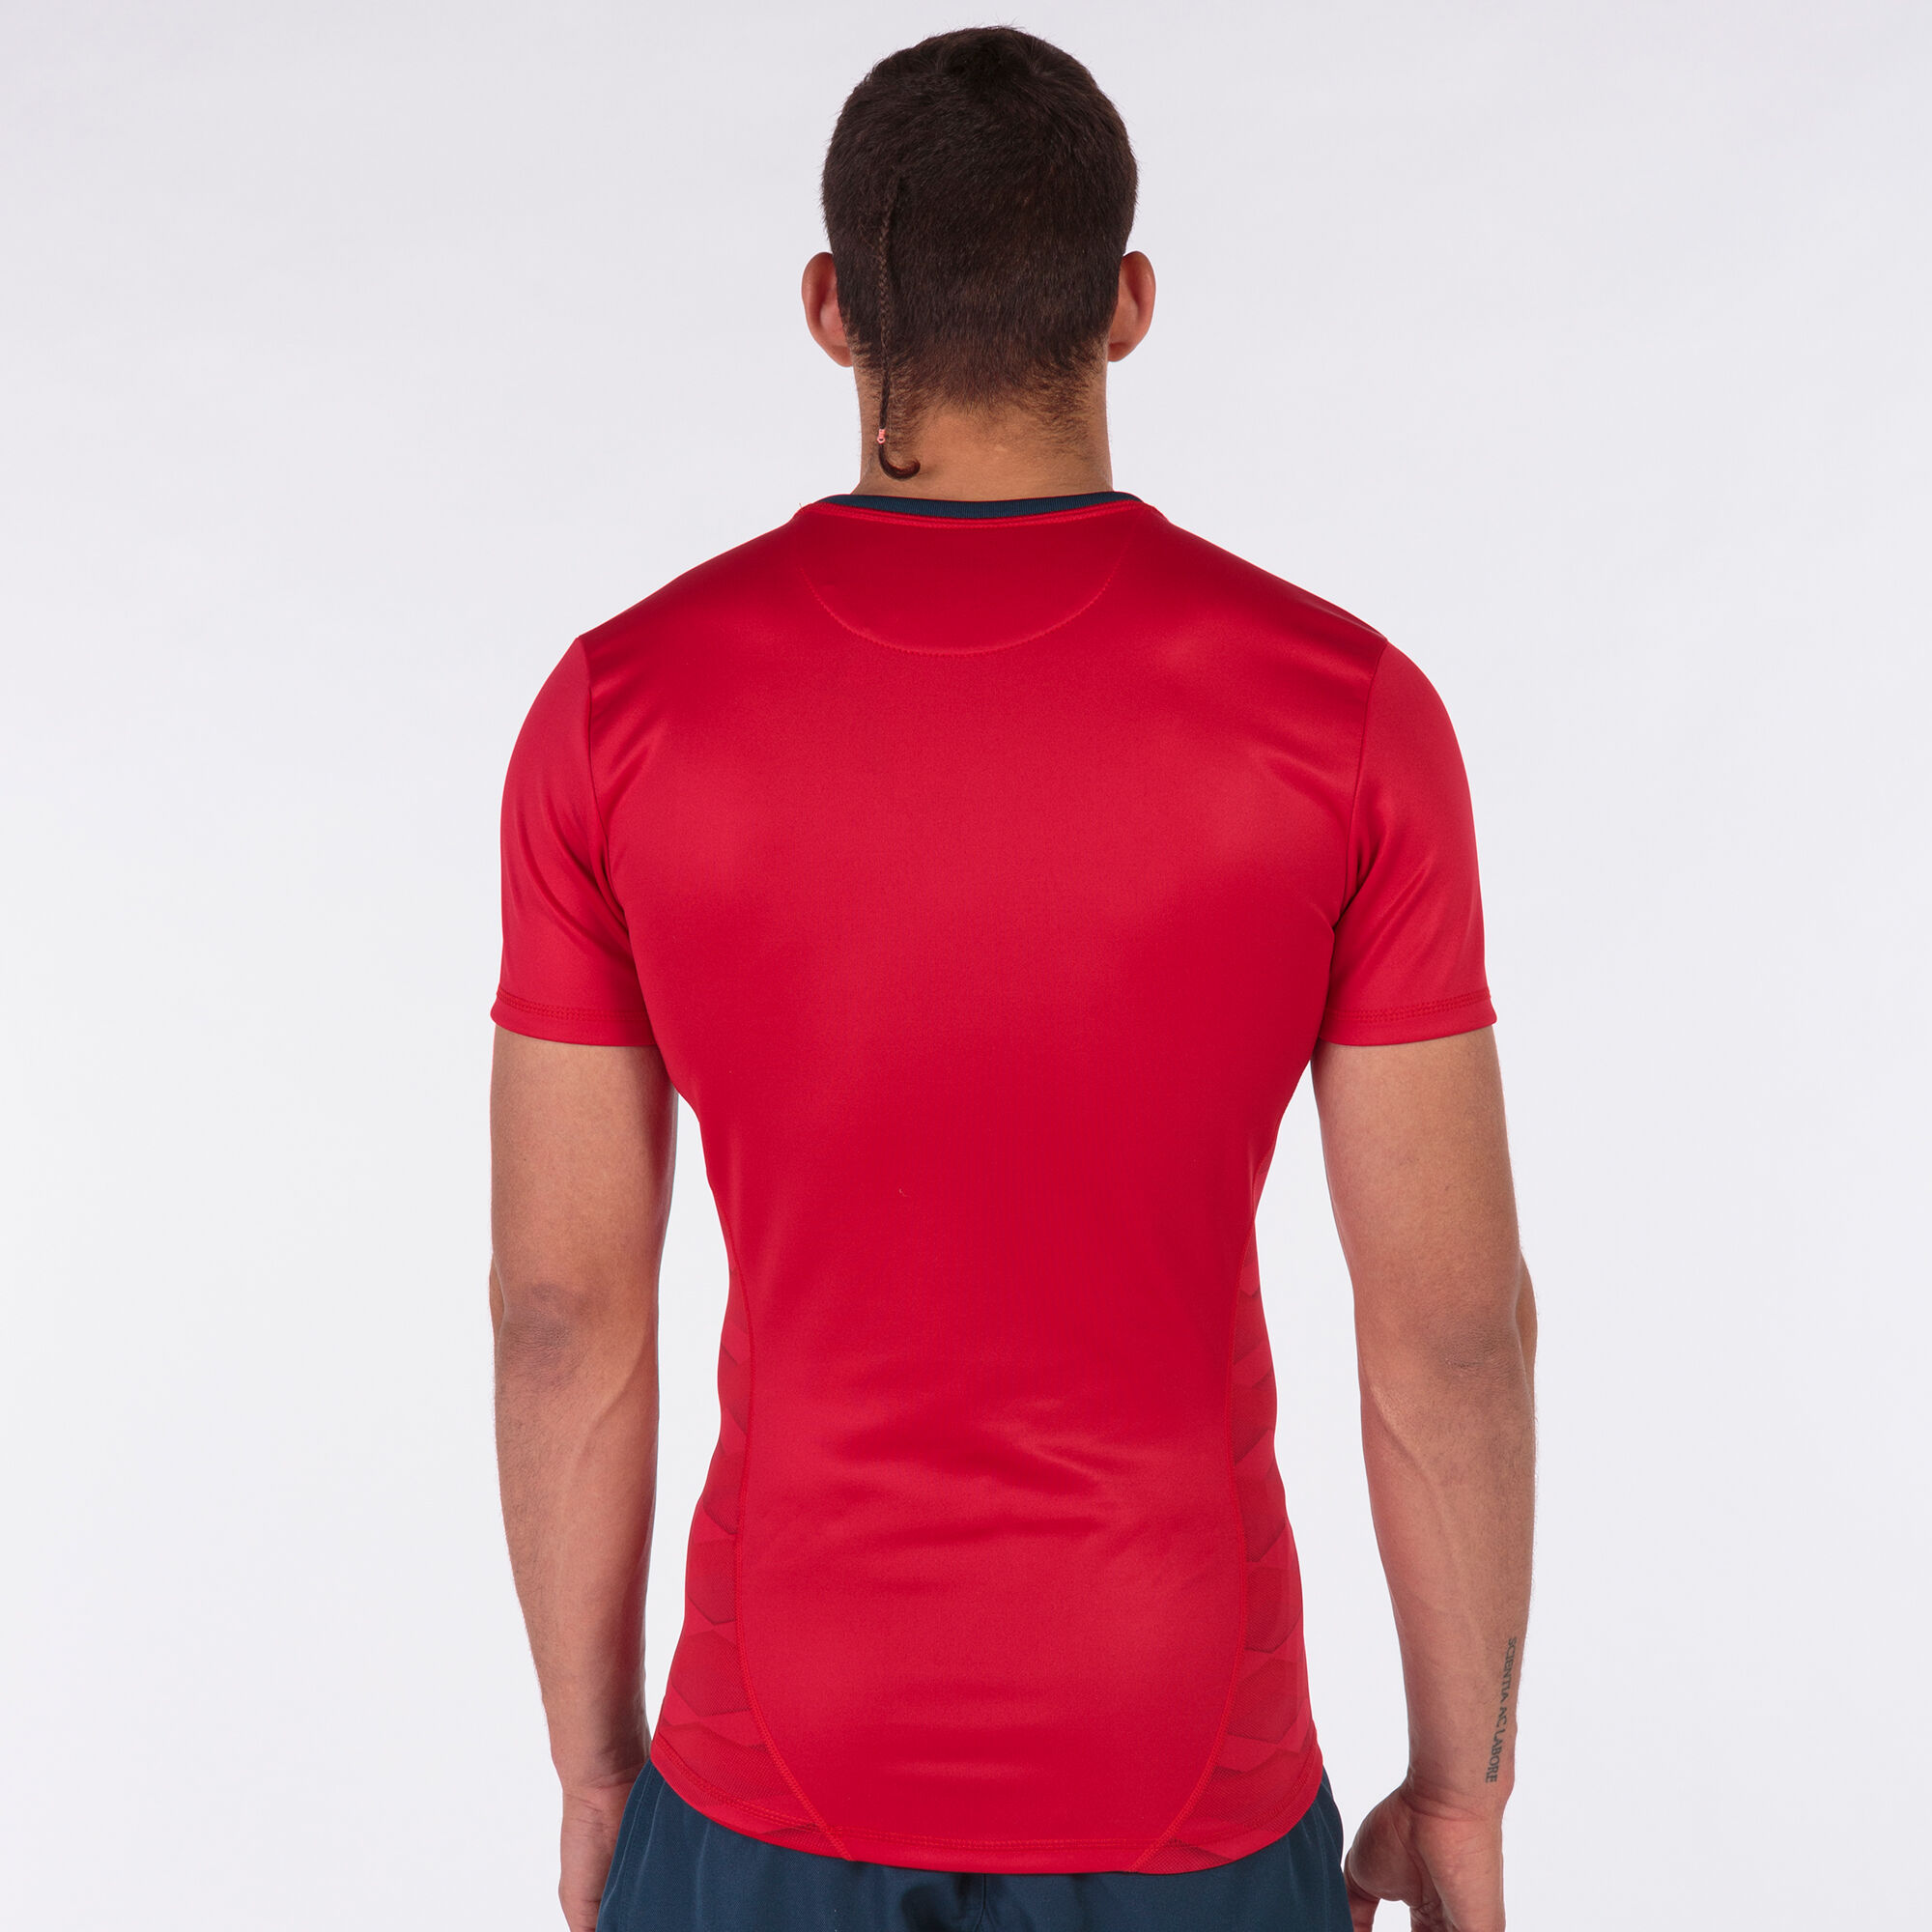 Camiseta manga corta hombre Myskin II rojo